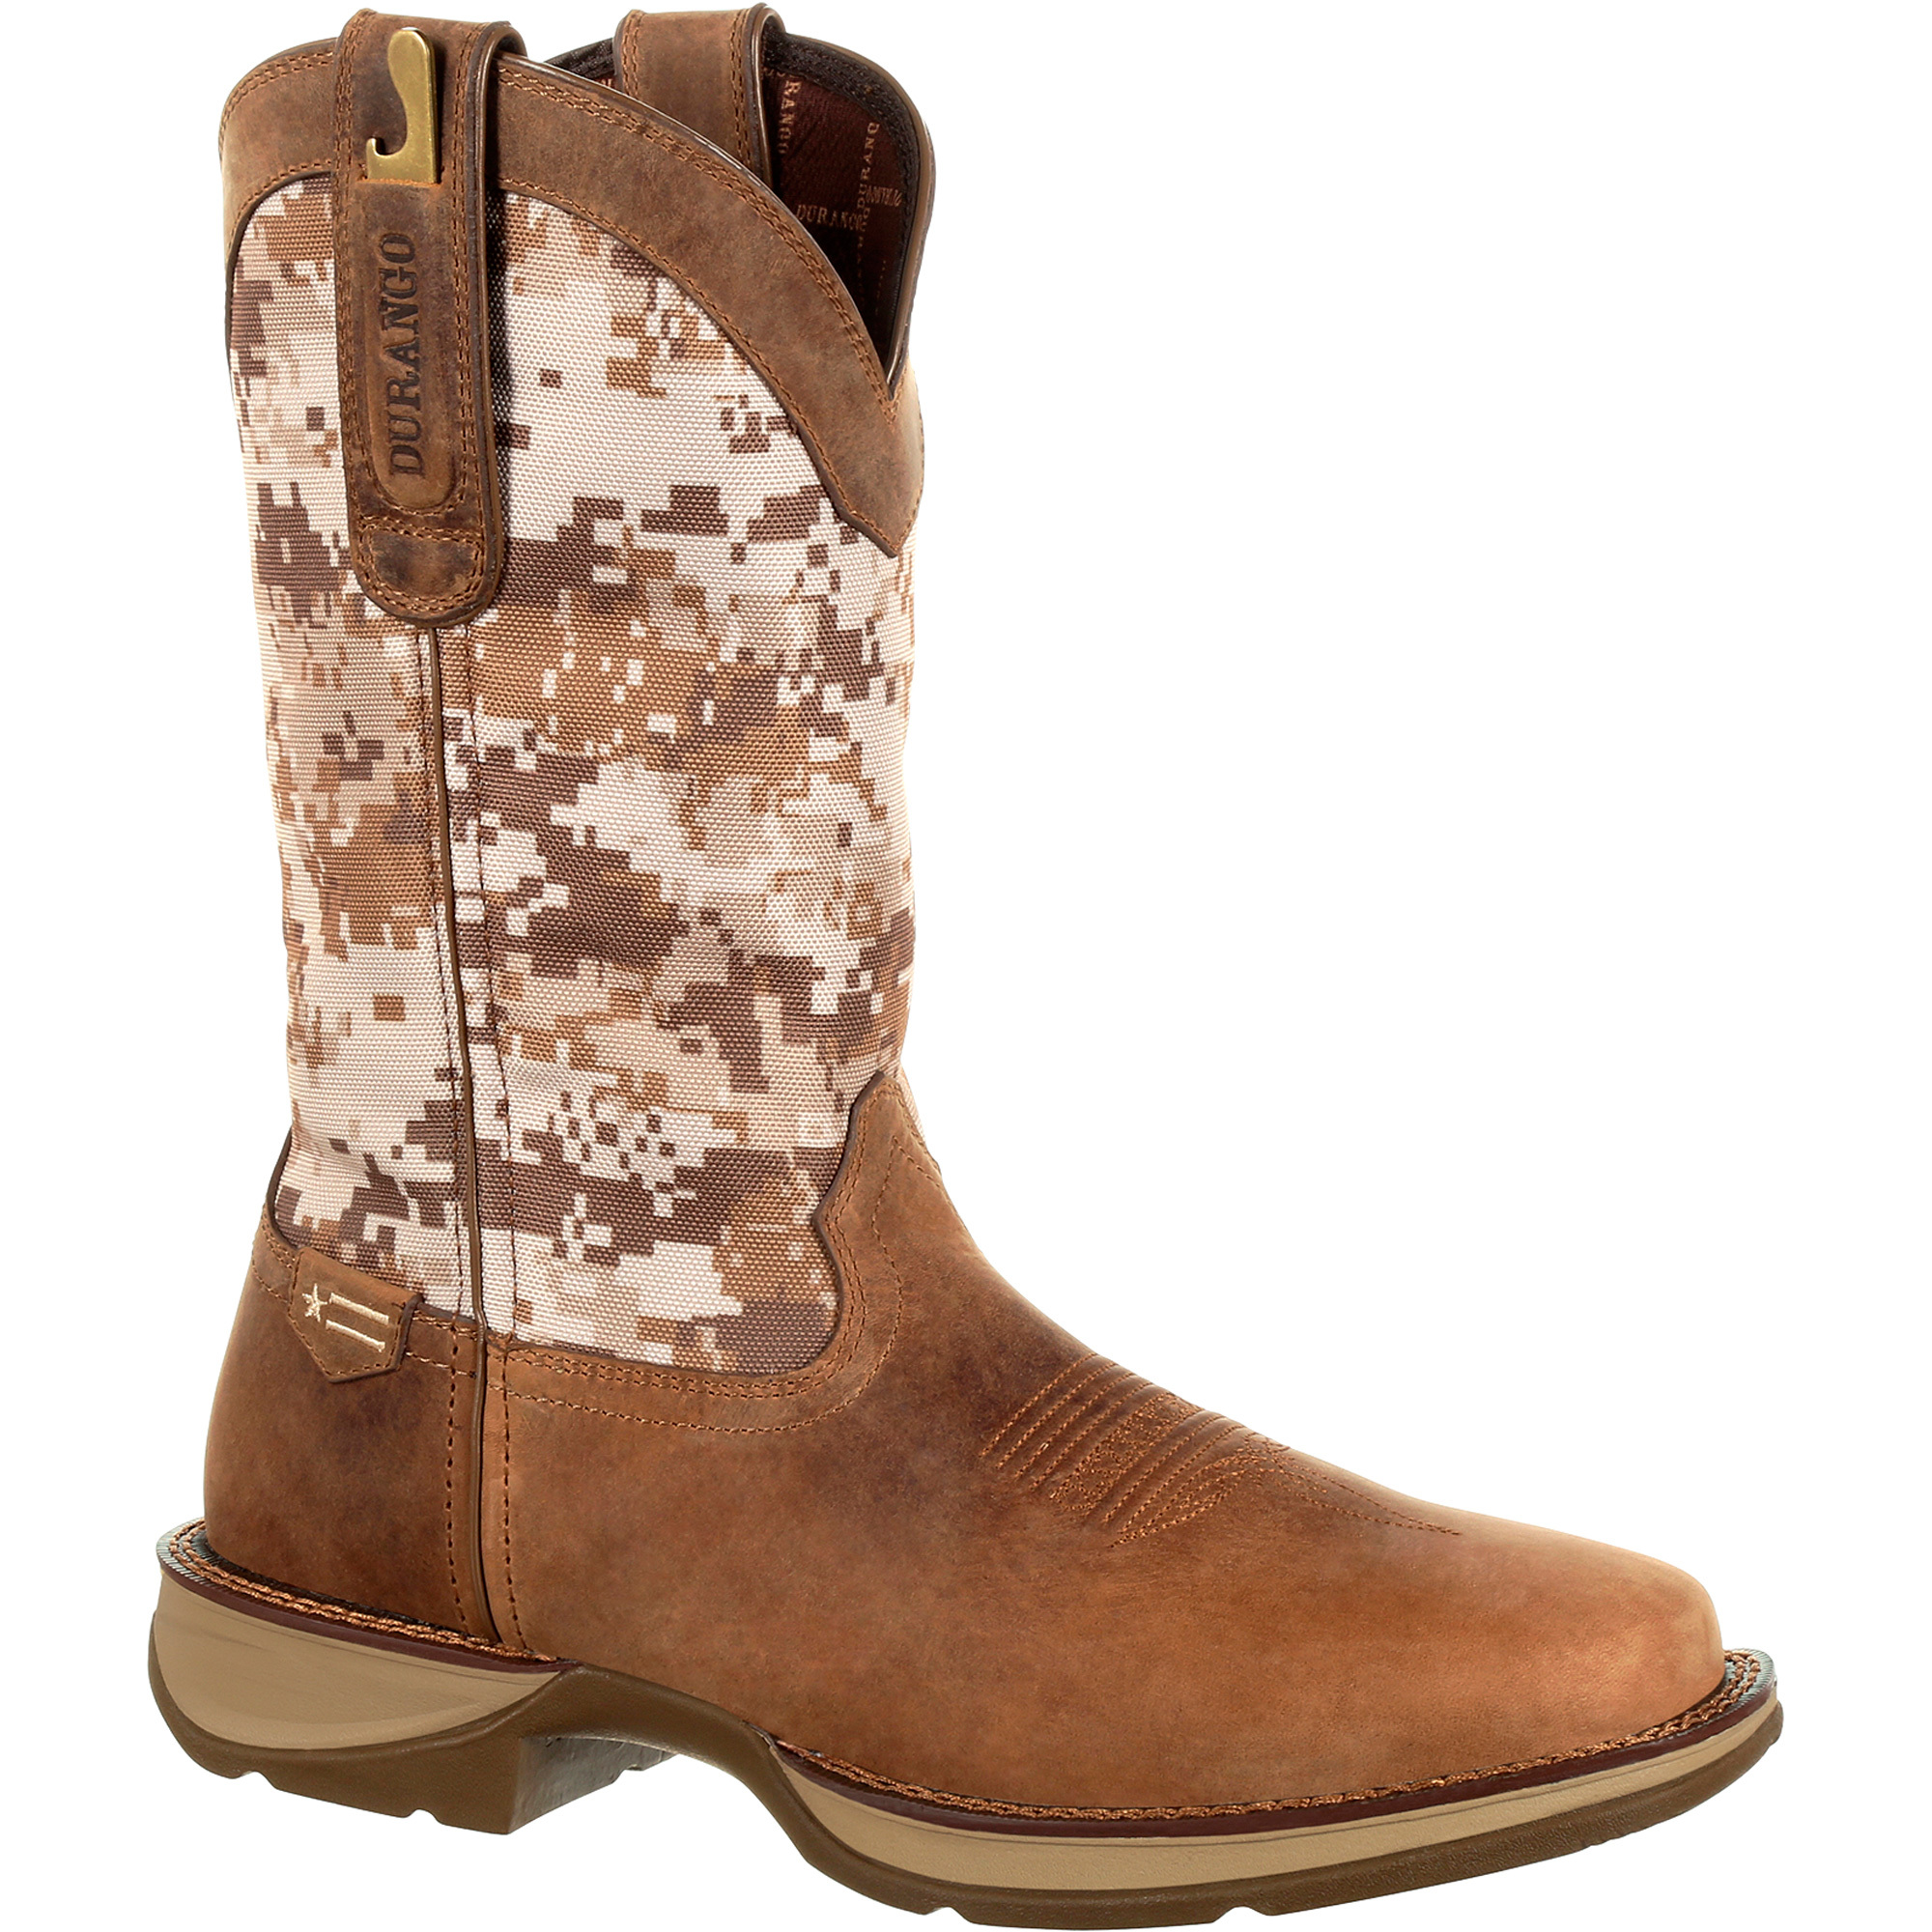 Durango Men's 12Inch Desert Camo Pull-On Rebel Western Boots â Dusty Brown/Desert Camo, Size 9 Wide, Model DDB0166